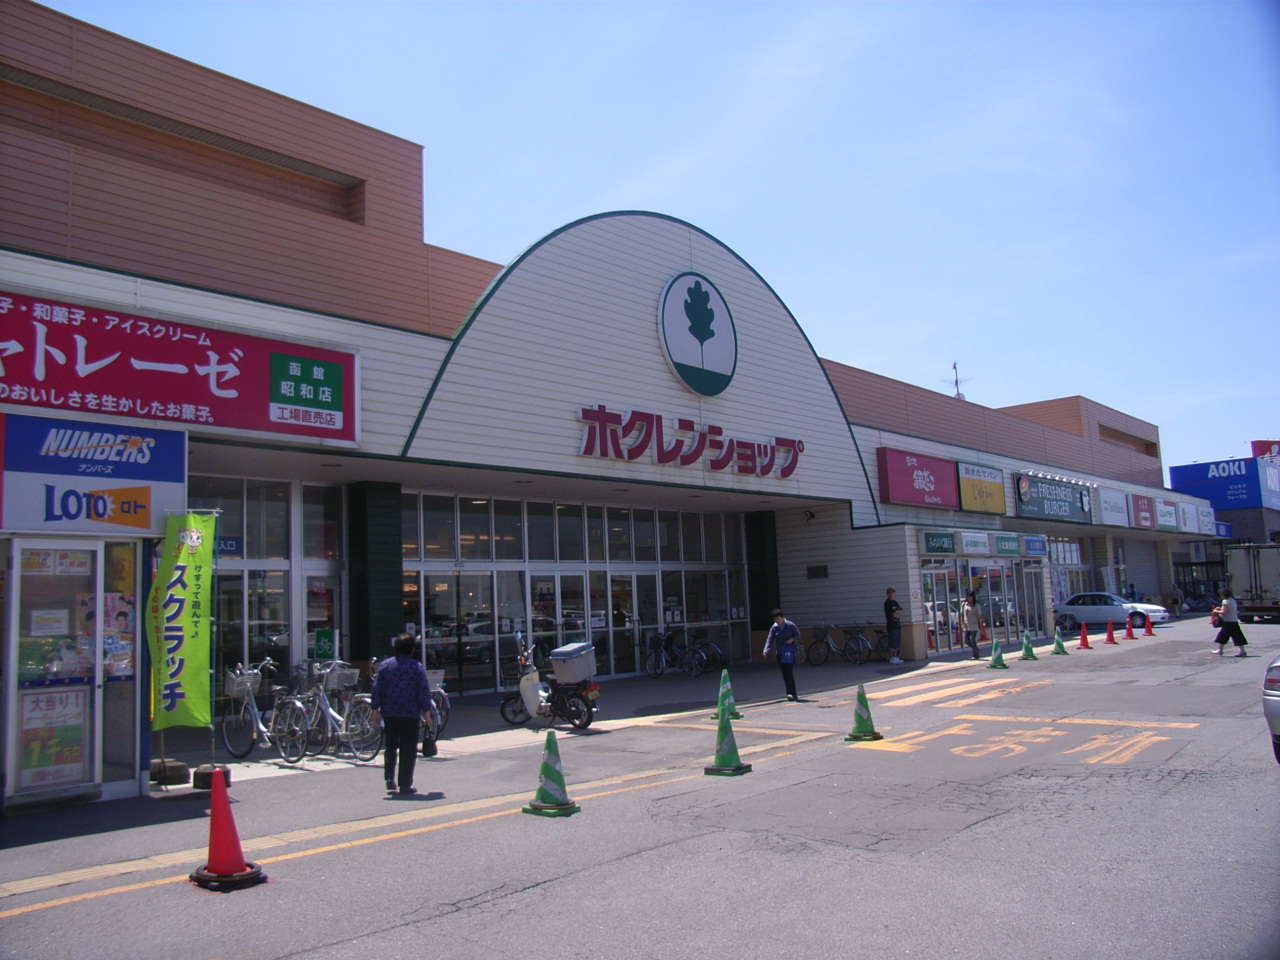 Supermarket. Hokuren shop 816m to Hakodate Showa store (Super)